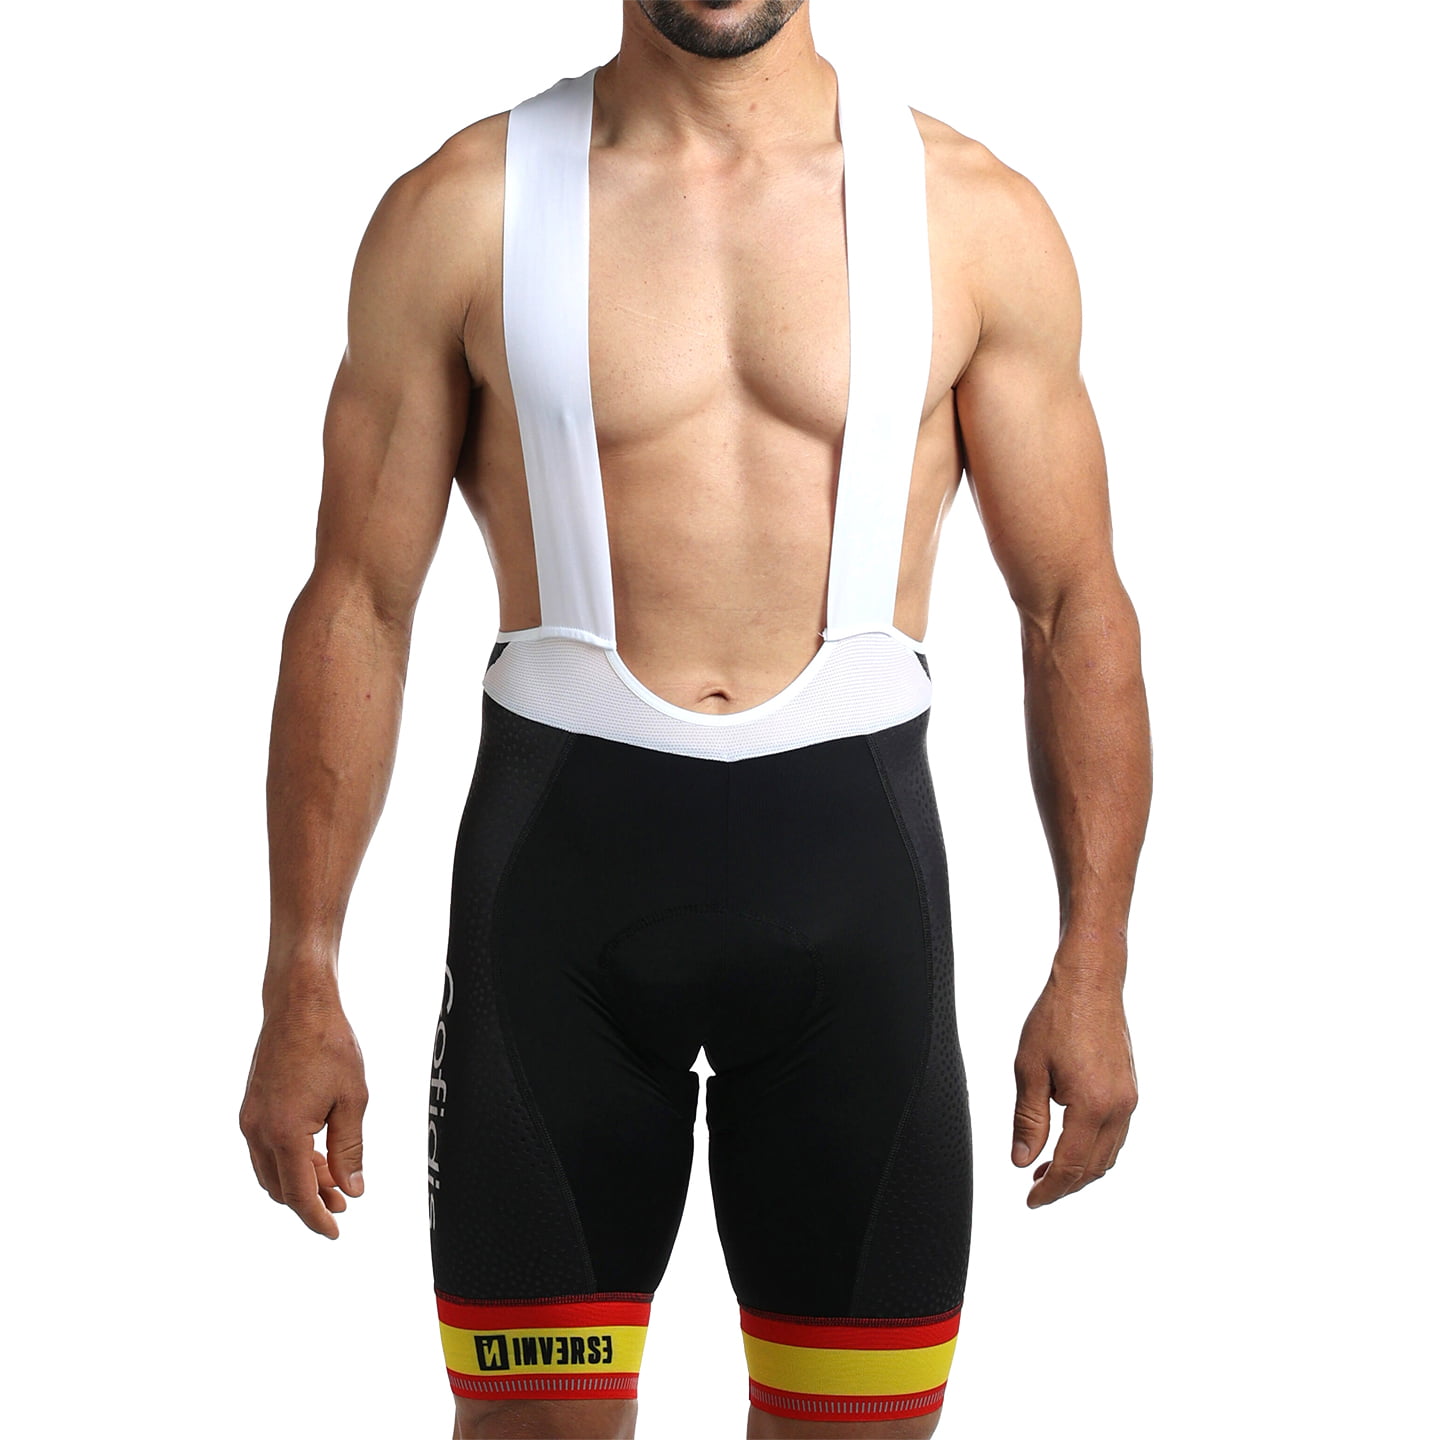 SPANISH NATIONAL TEAM 2024 Bib Shorts, for men, size L, Cycle shorts, Cycling clothing